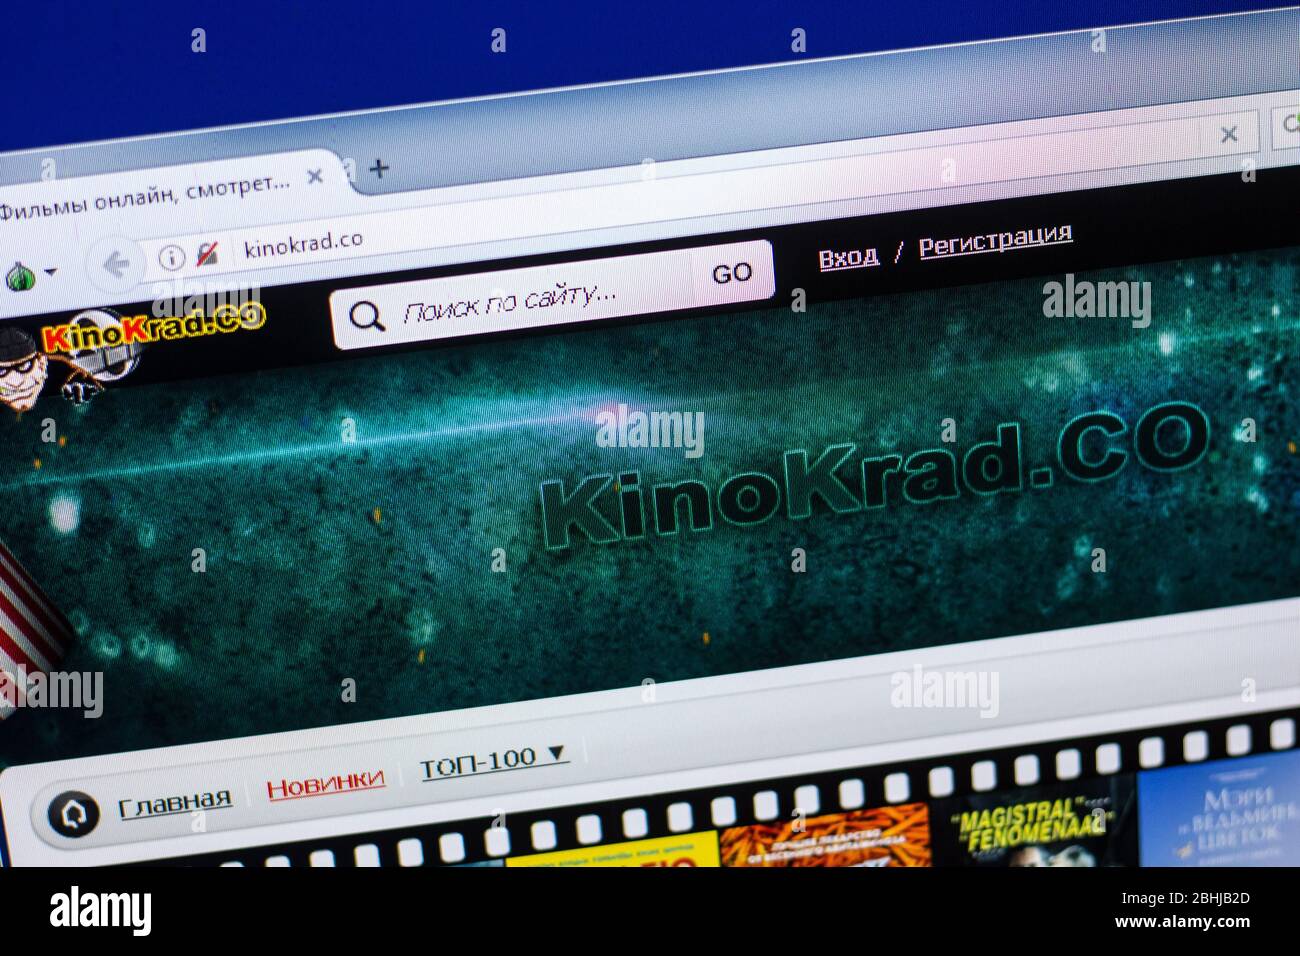 Https kinokrad cc. Кинокрад. Kinokrad. Kinokrad logo.